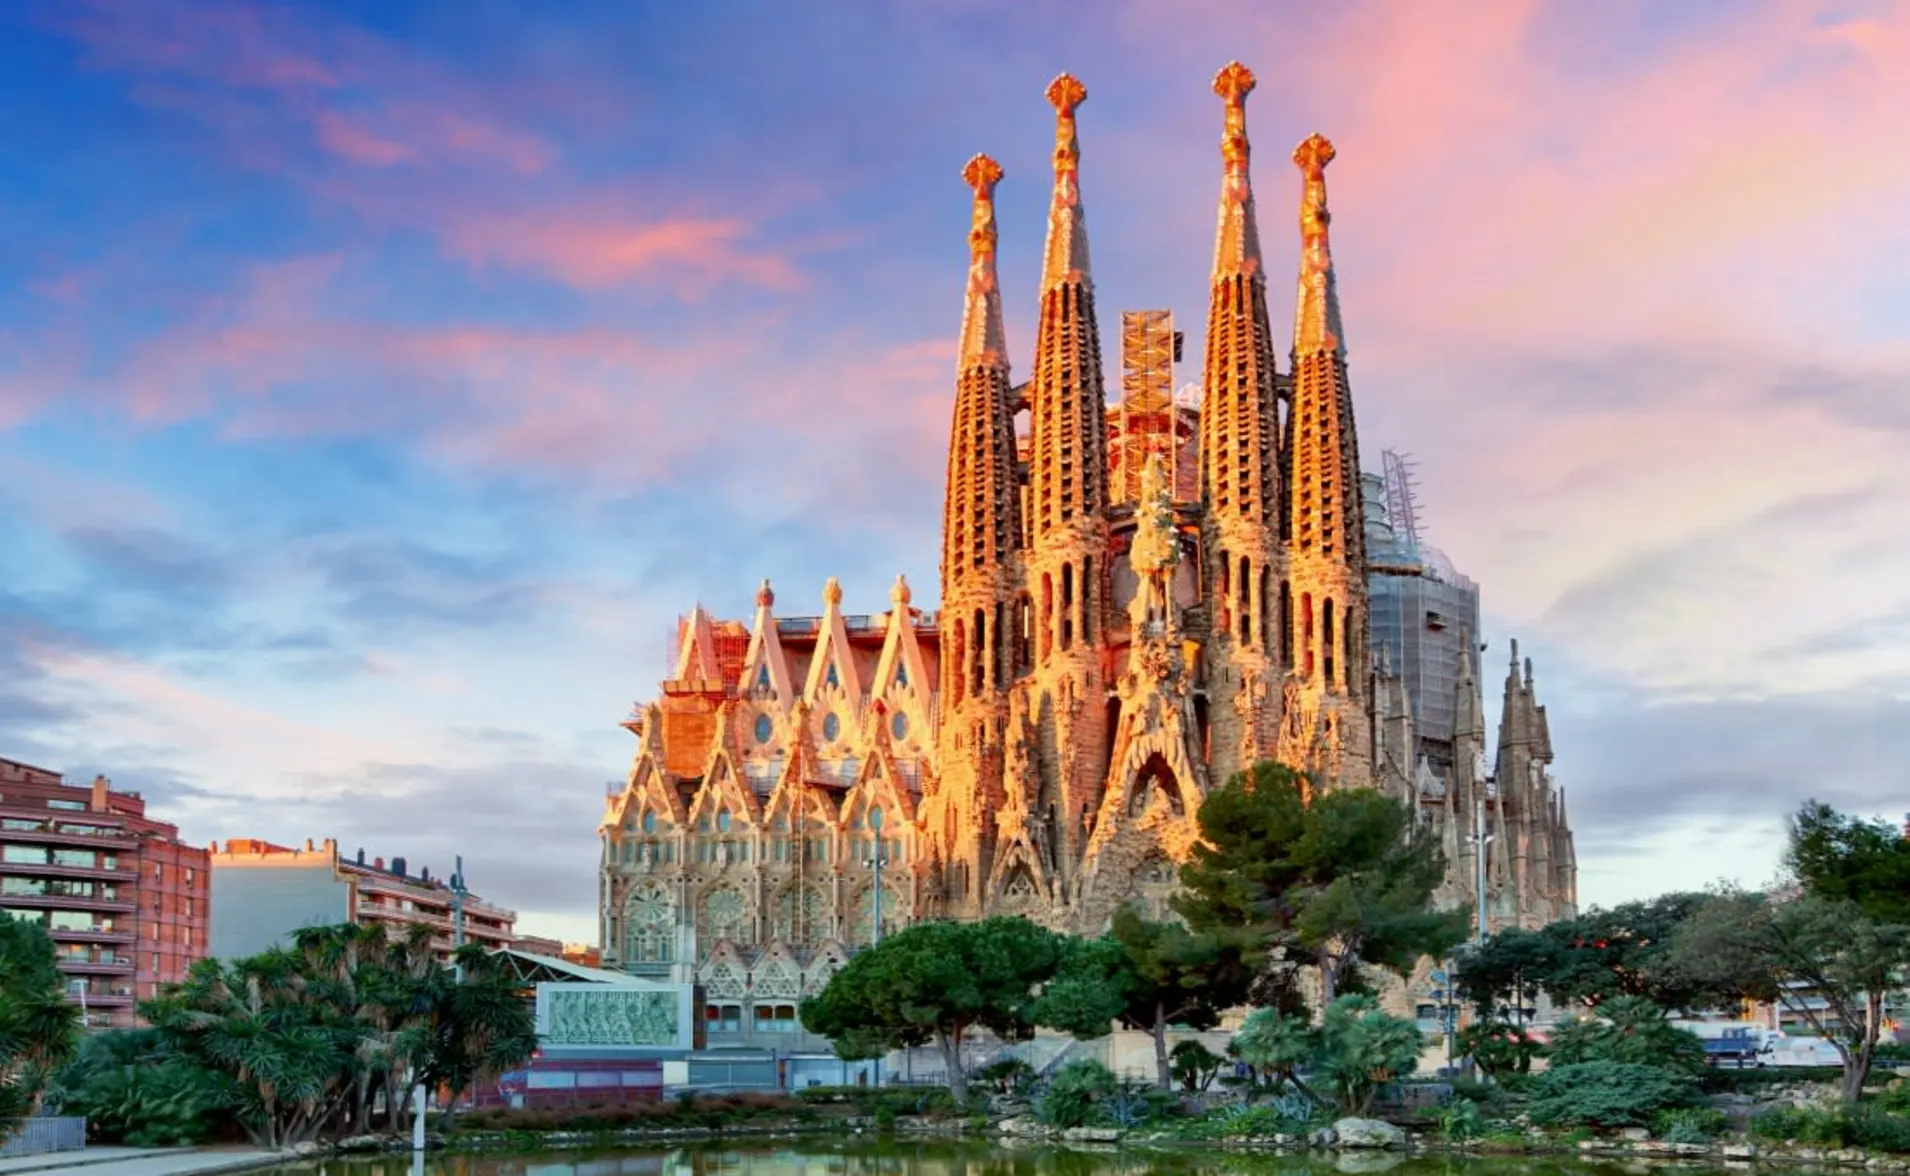 Sagrada Familia in Barcelona at sunset